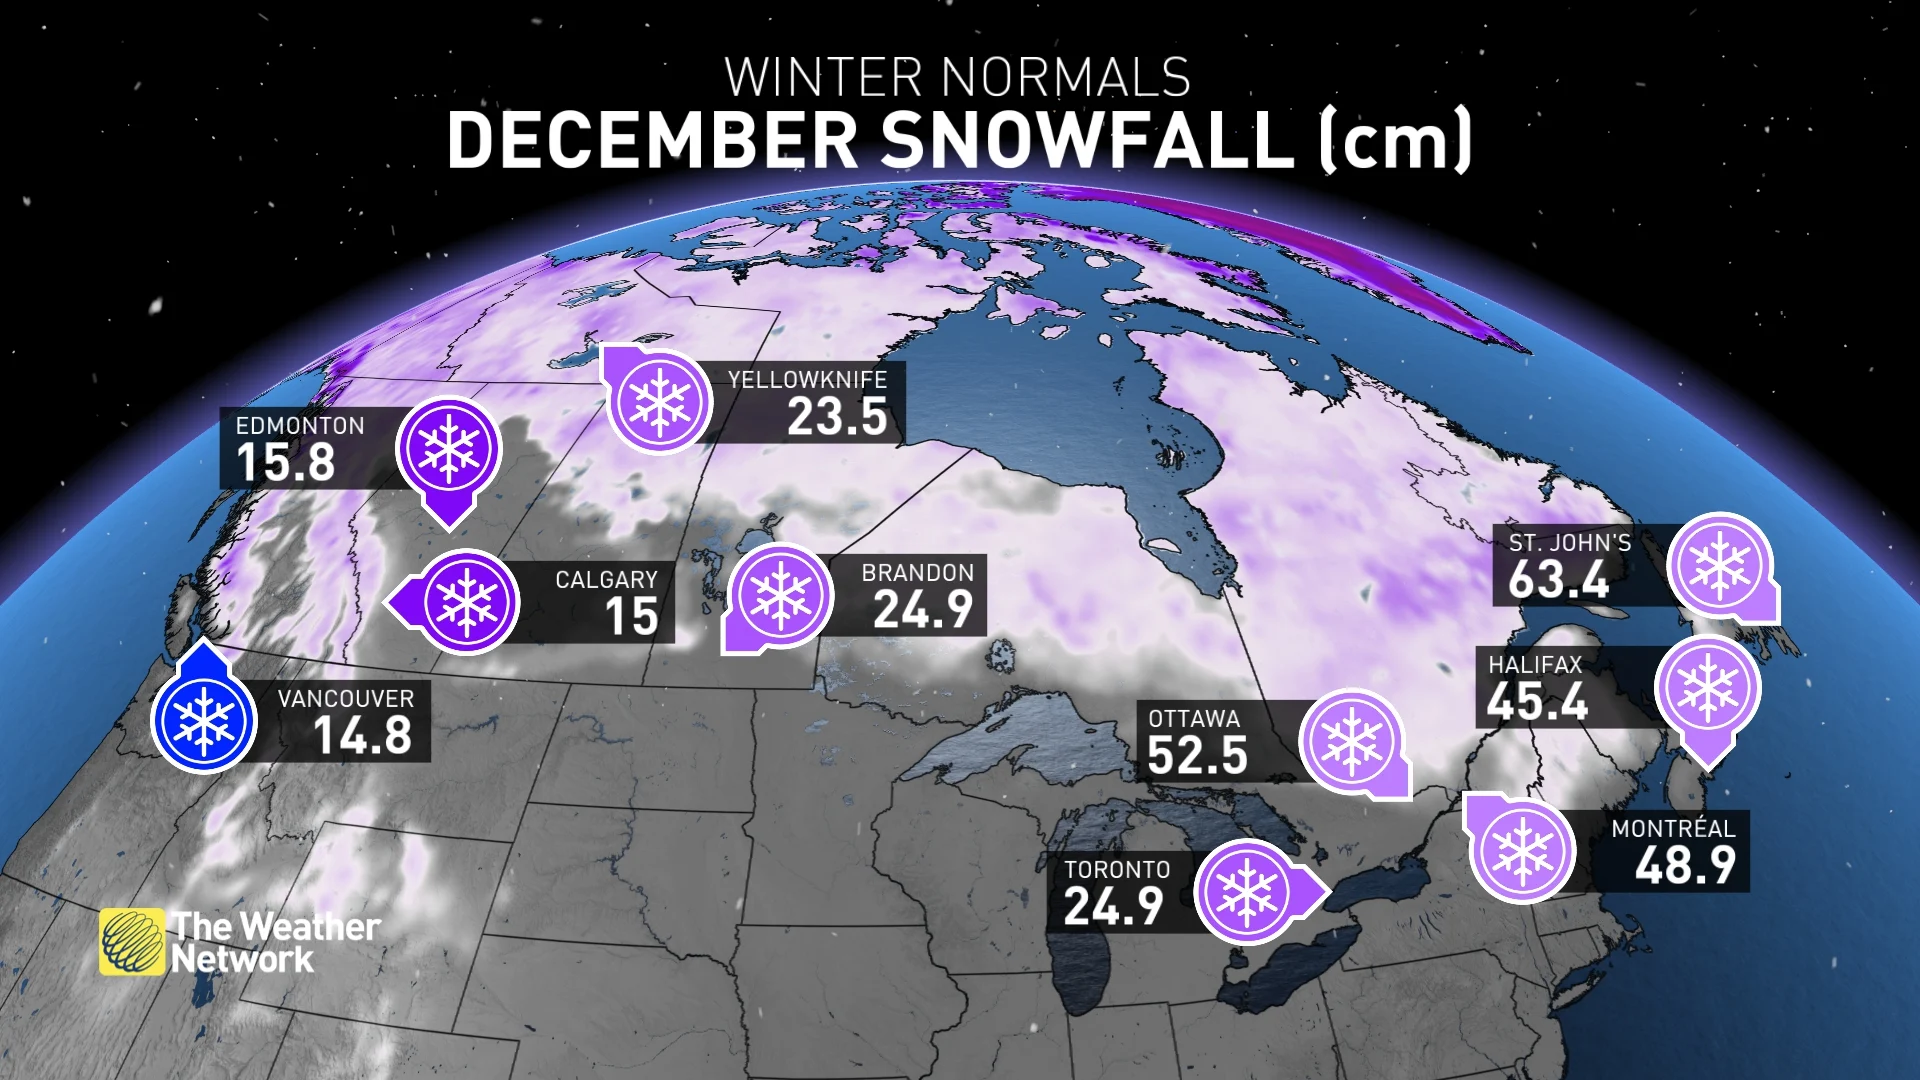 December snowfall normals for Canada